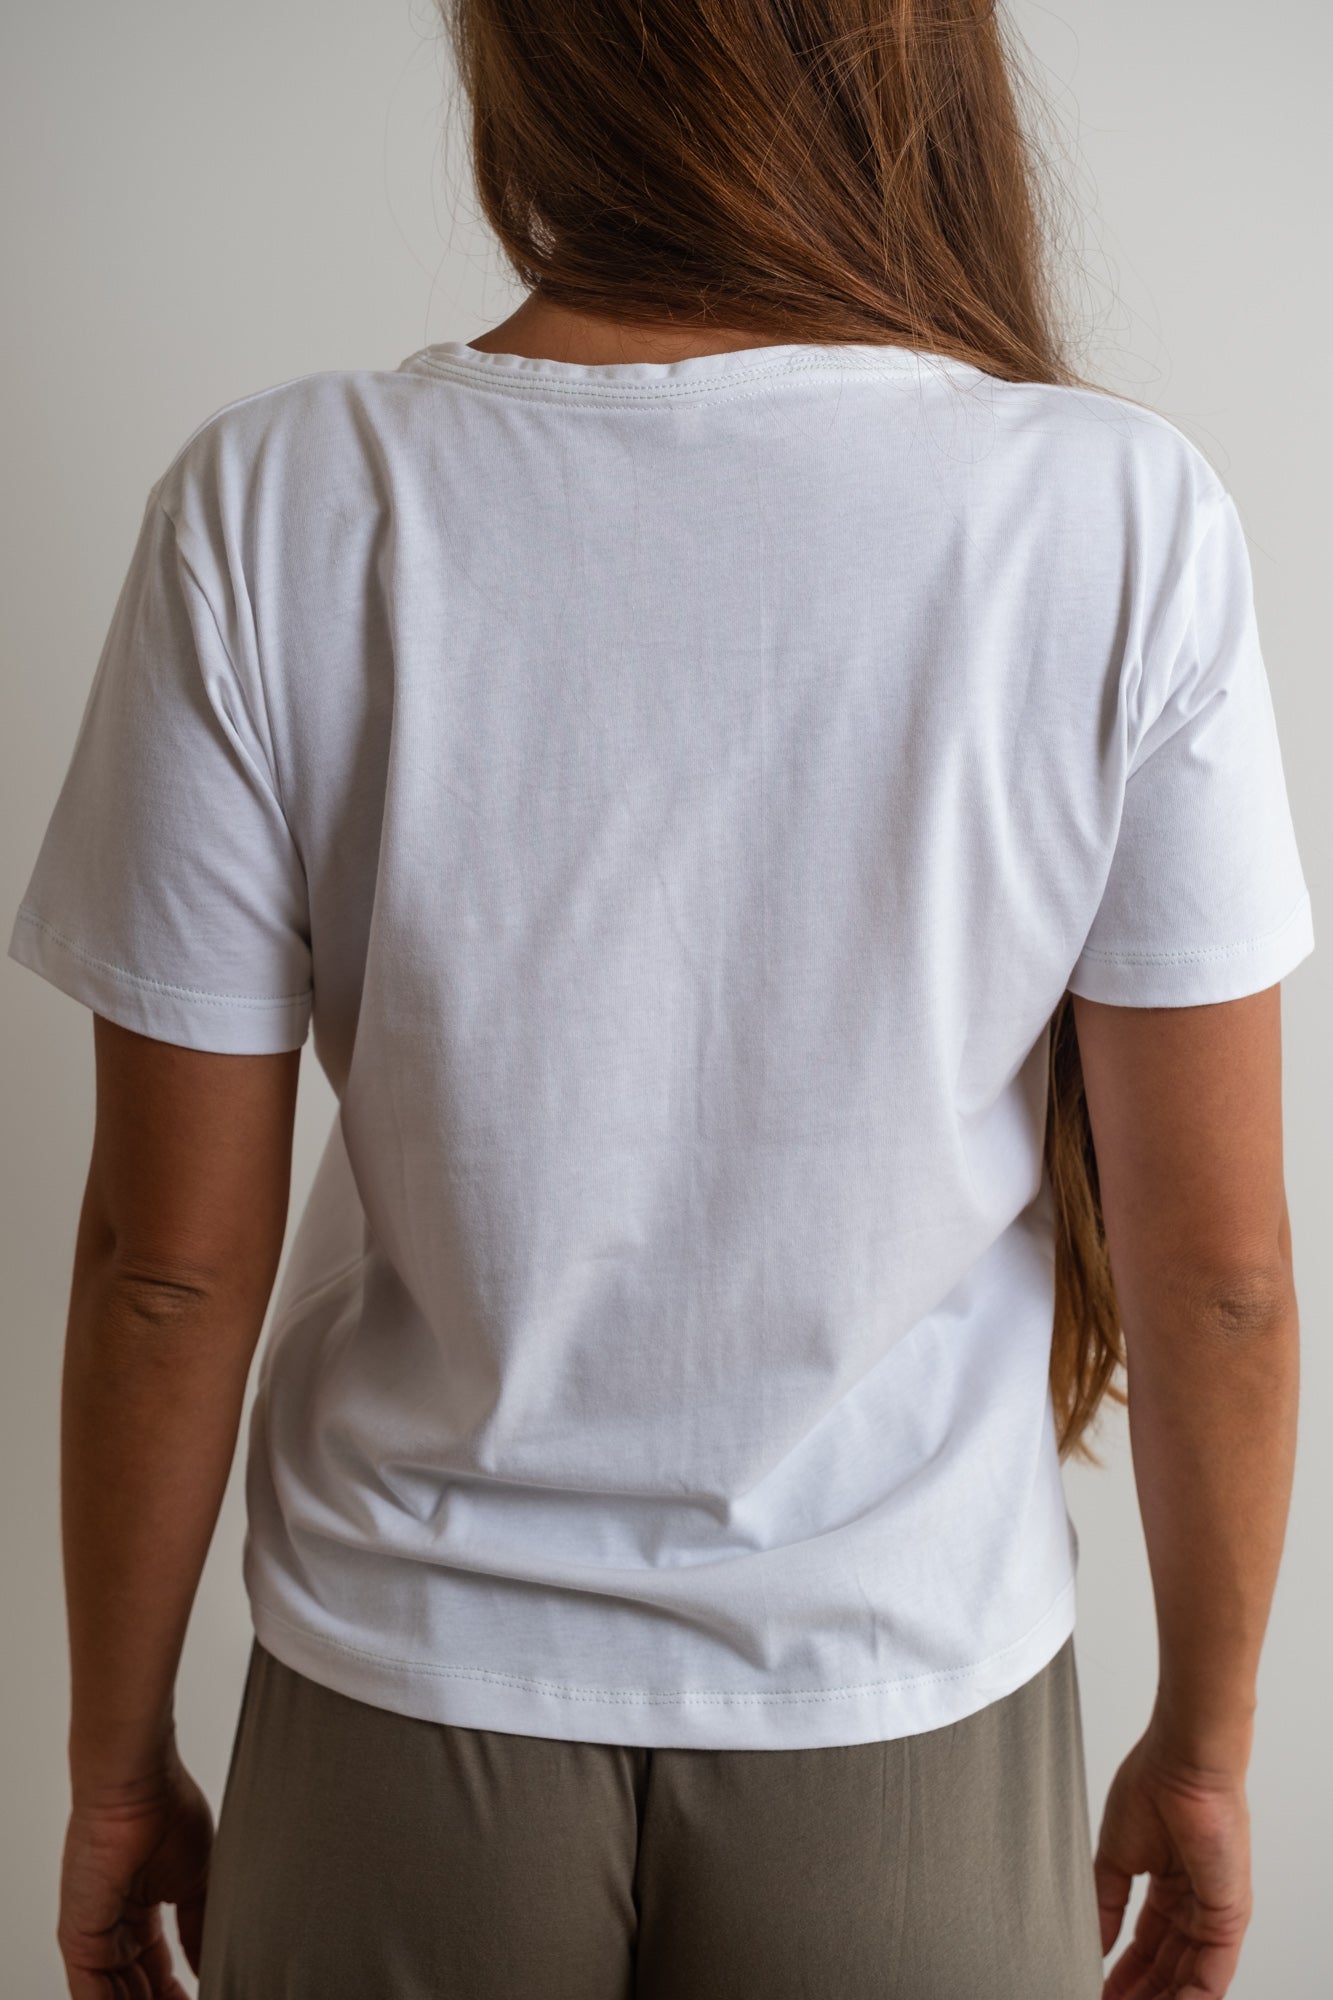 MIA Moda Regenerativa Camisetas L Camiseta Esencial mujer - blanco